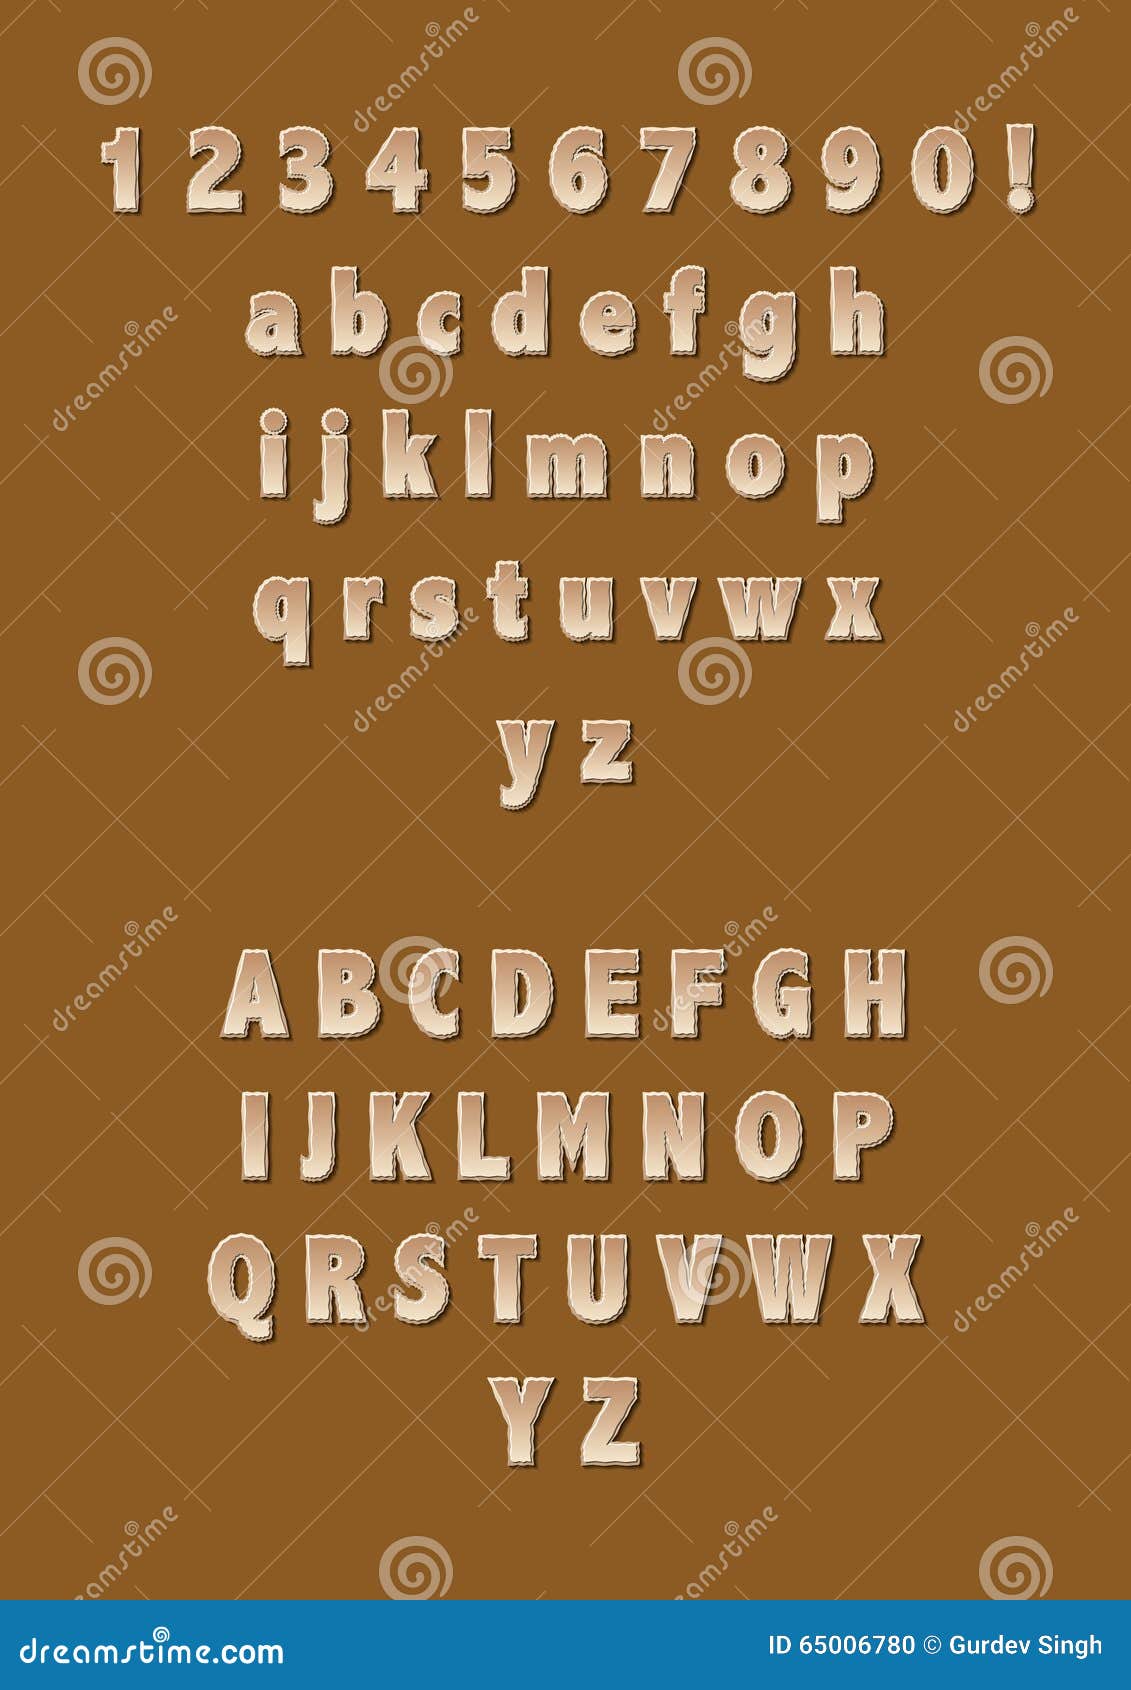 Alphabets stock illustration. Illustration of grungeeffect - 65006780